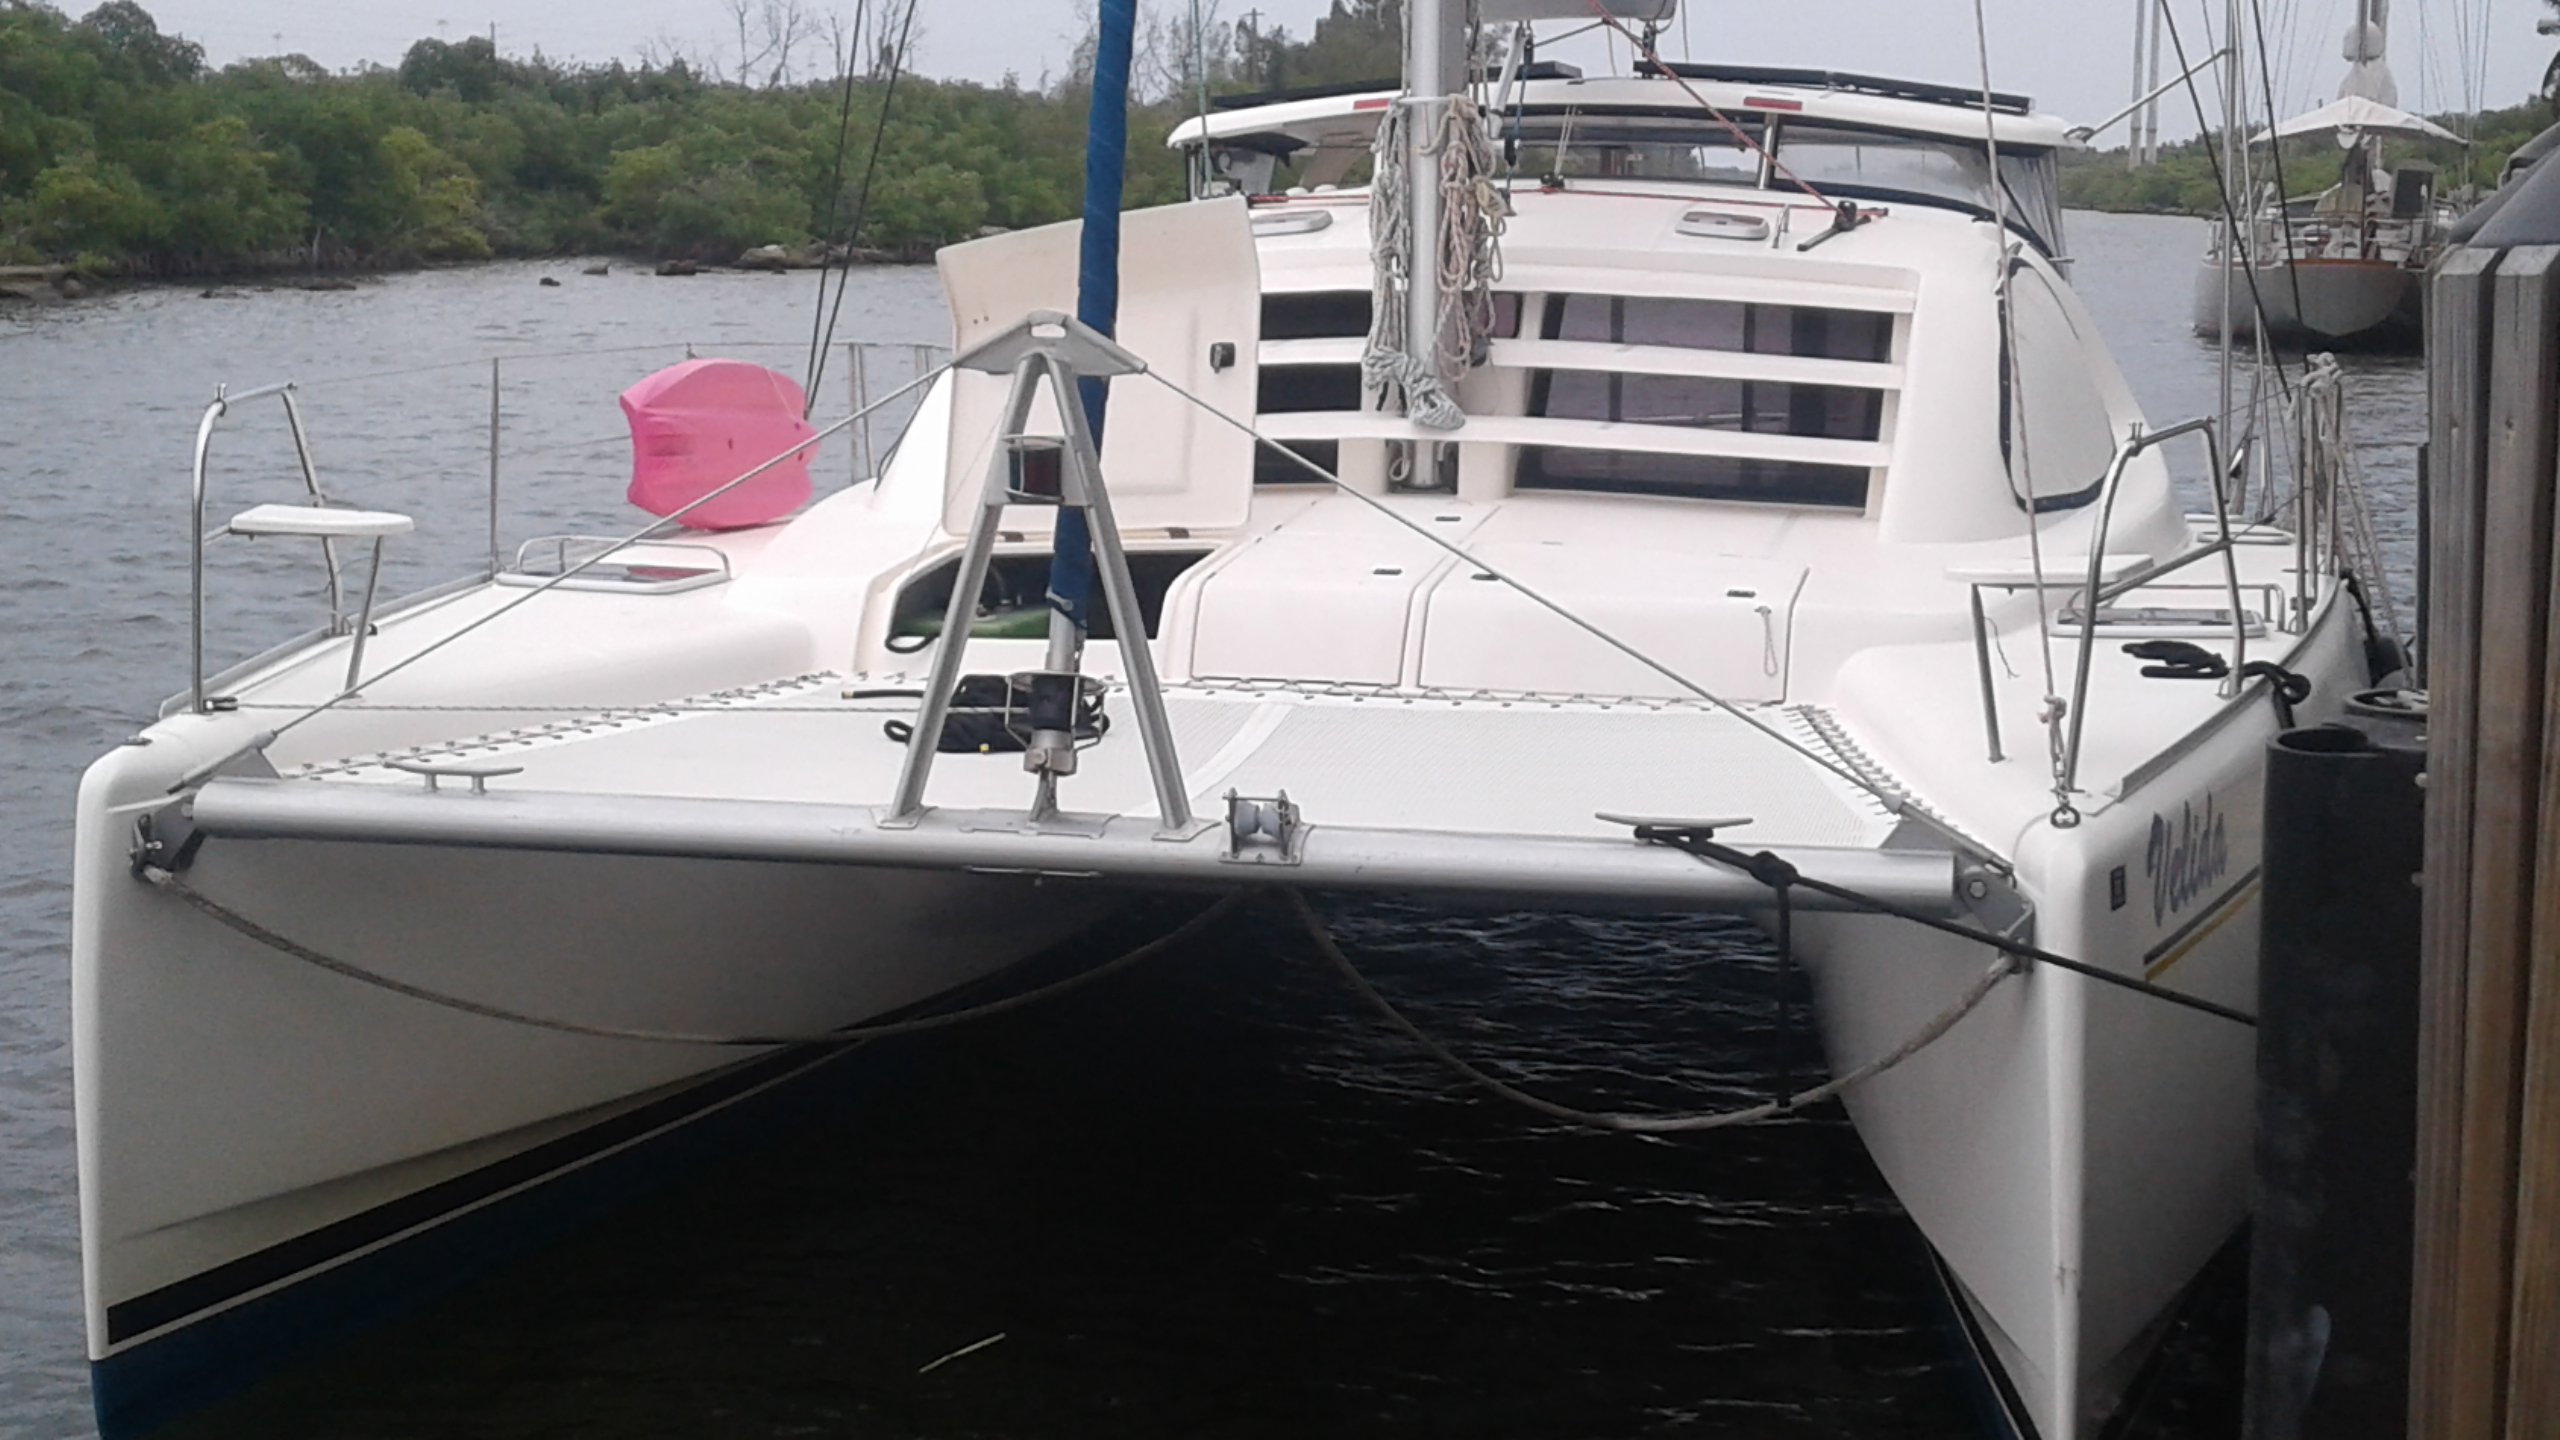 38 foot Calbo Rico yacht relocation